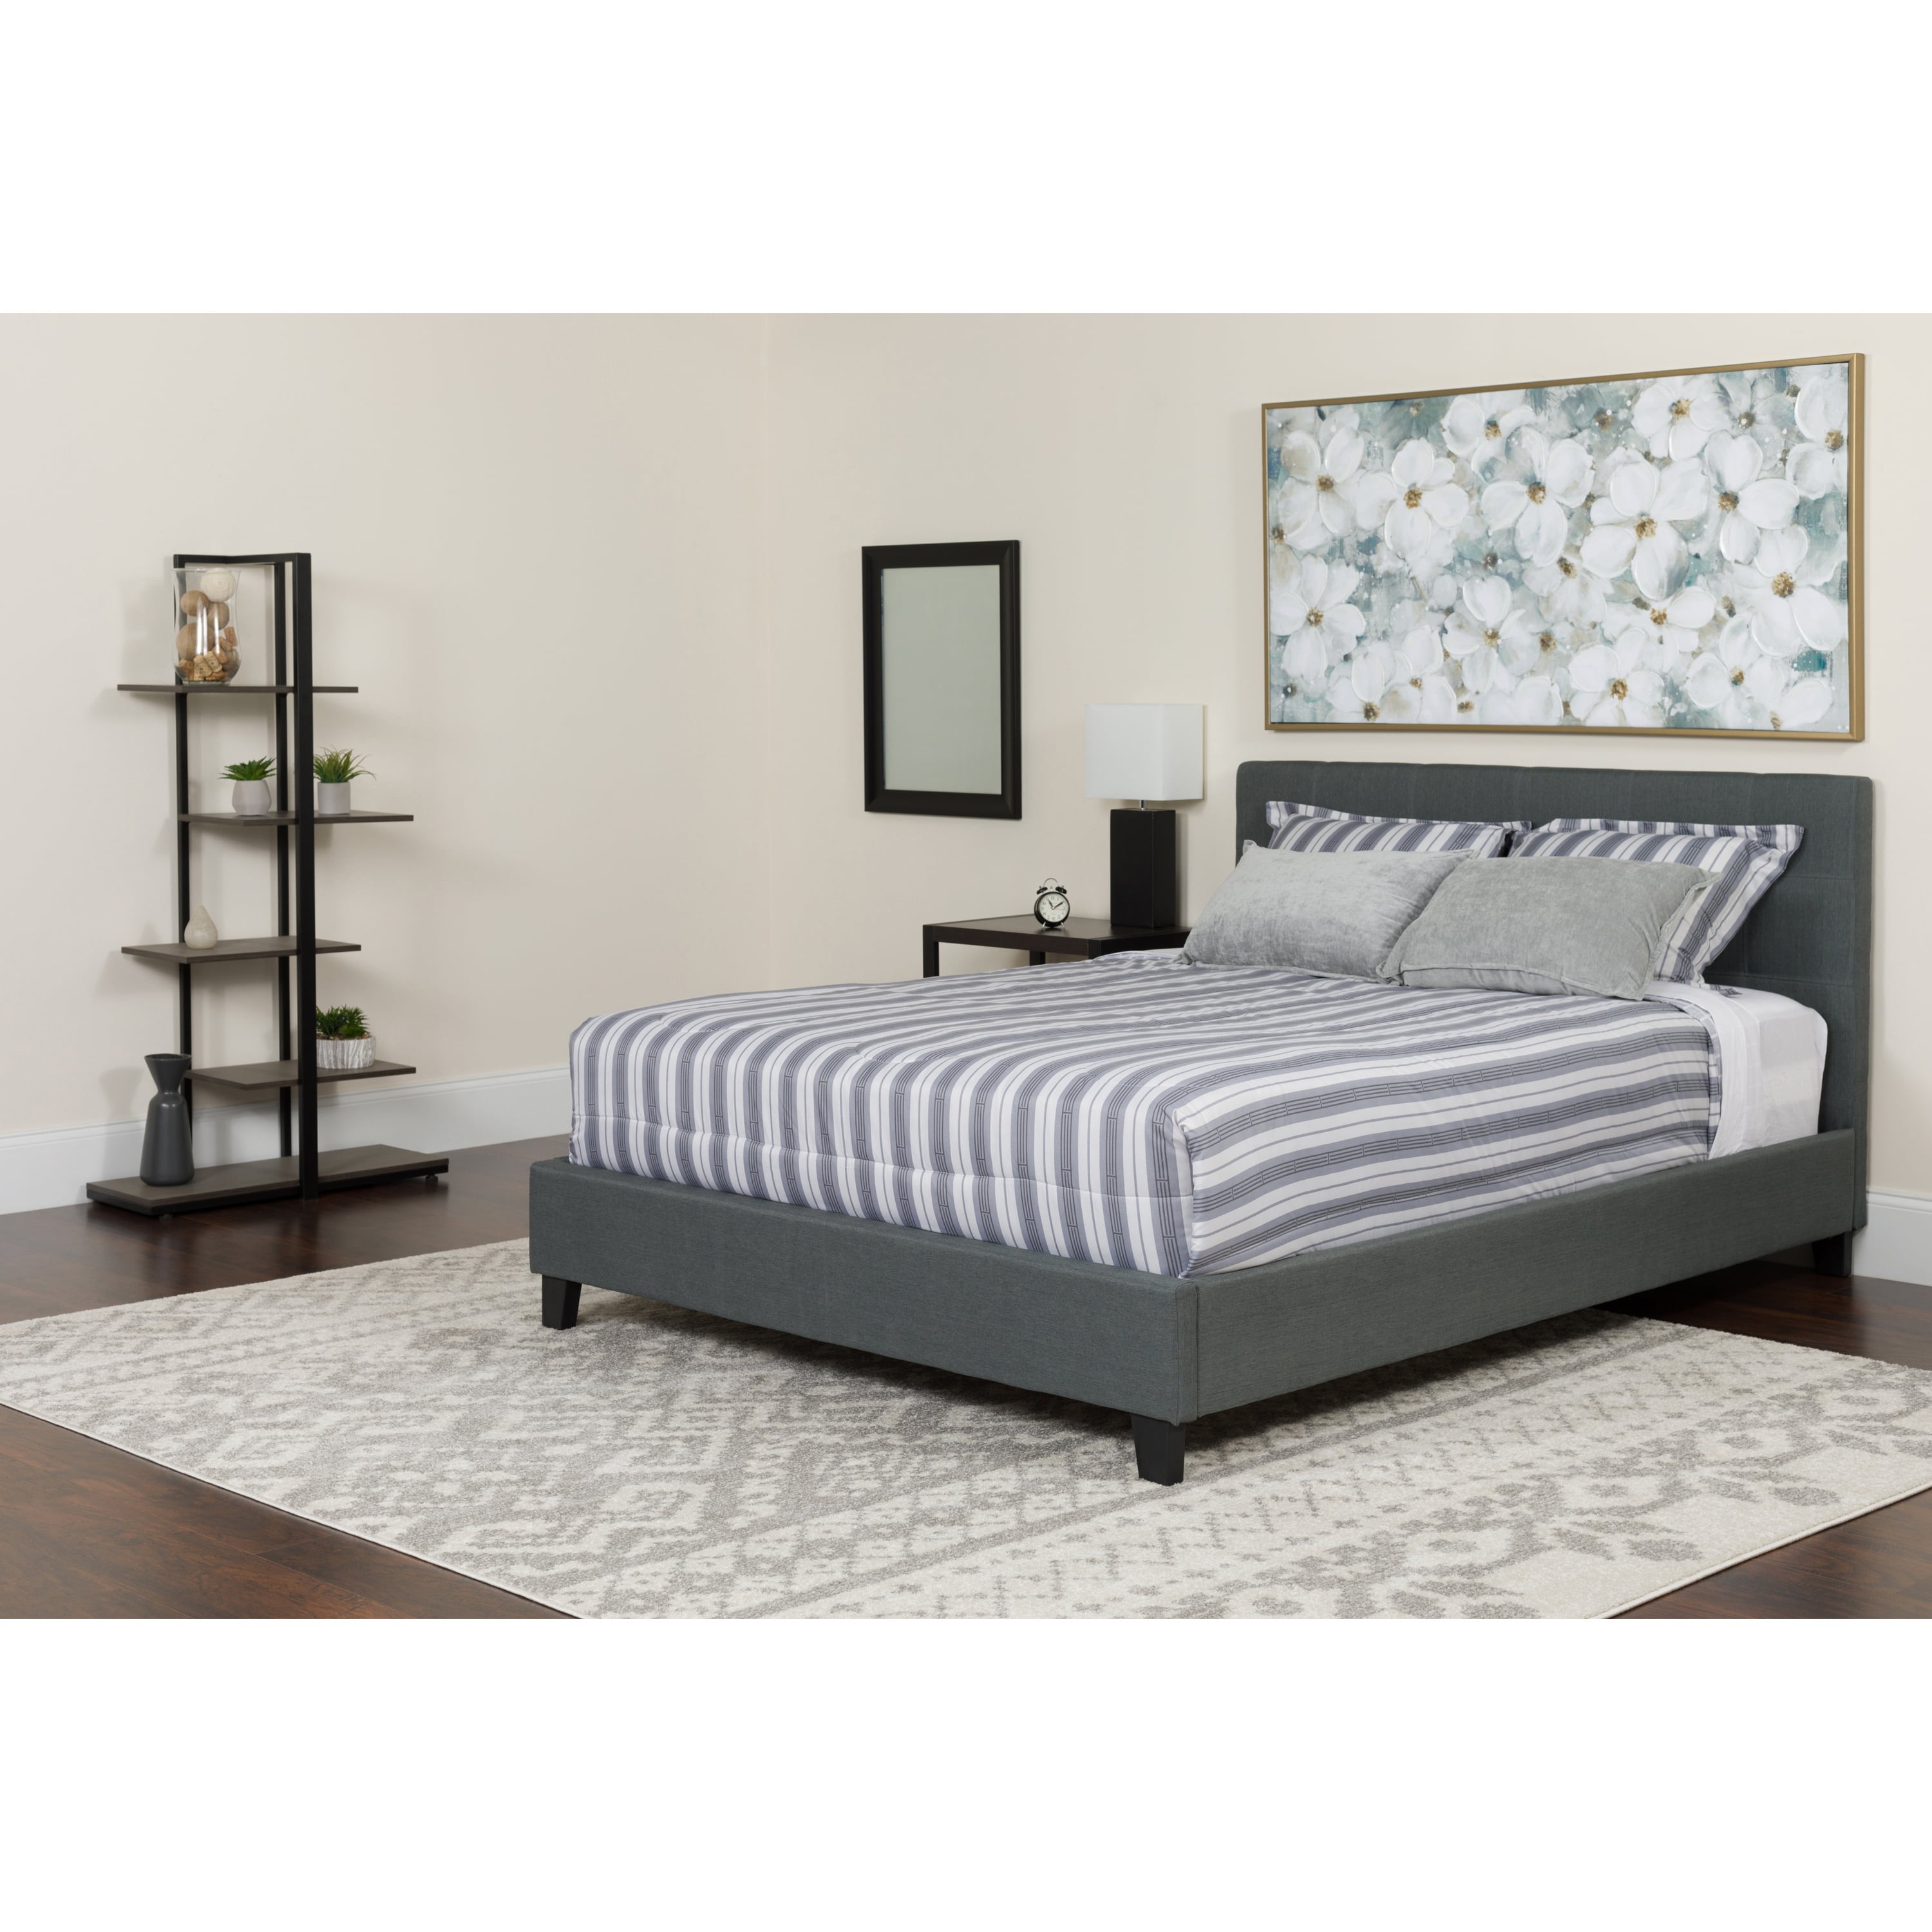 Bed Frame Platform Full Size Upholstered Headboard Bedroom Wood Slat Kit Gray